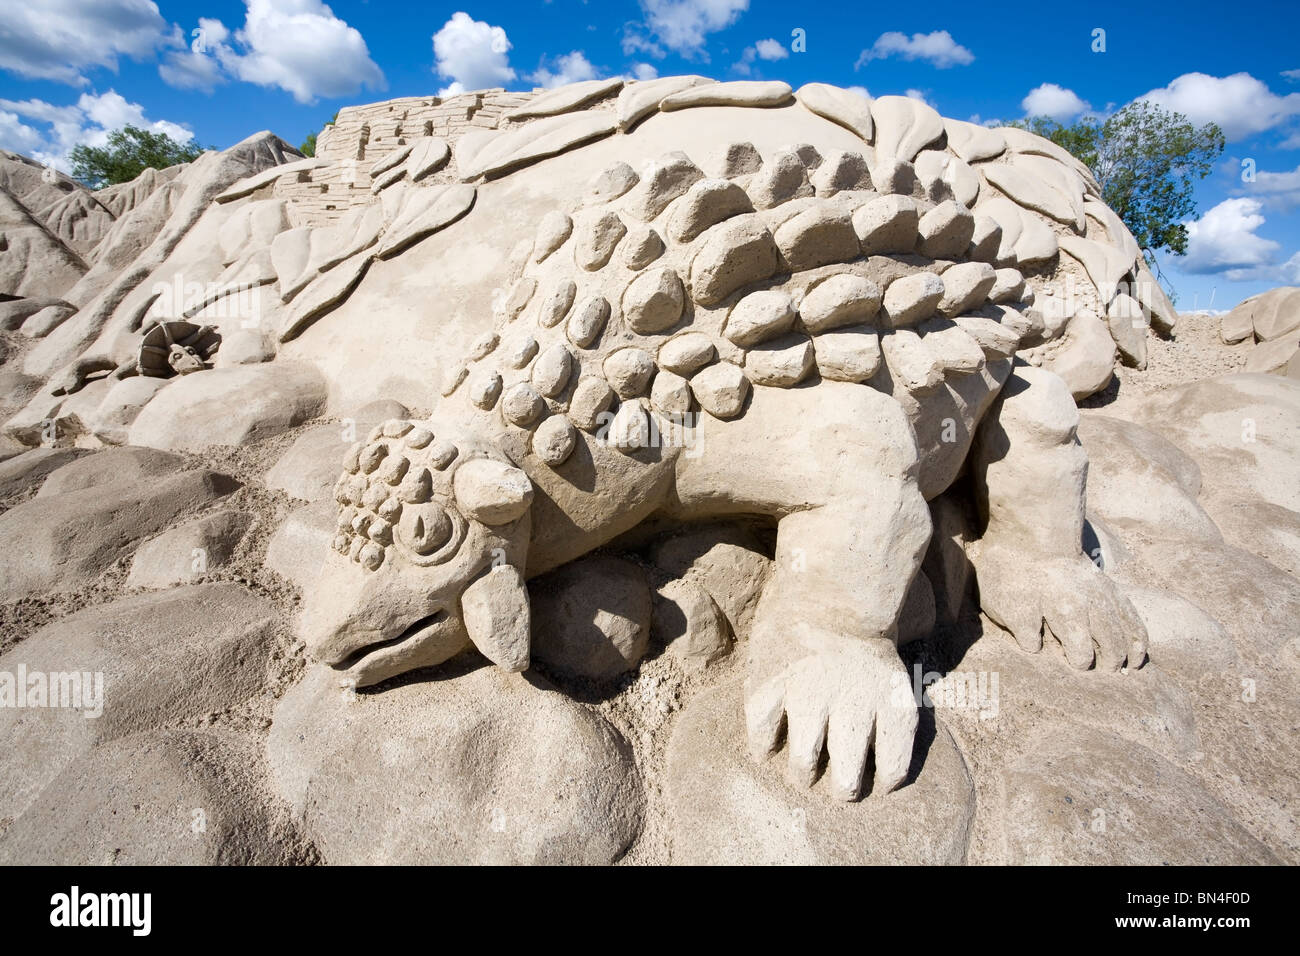 Dinosaur sand sculpture Stock Photo - Alamy